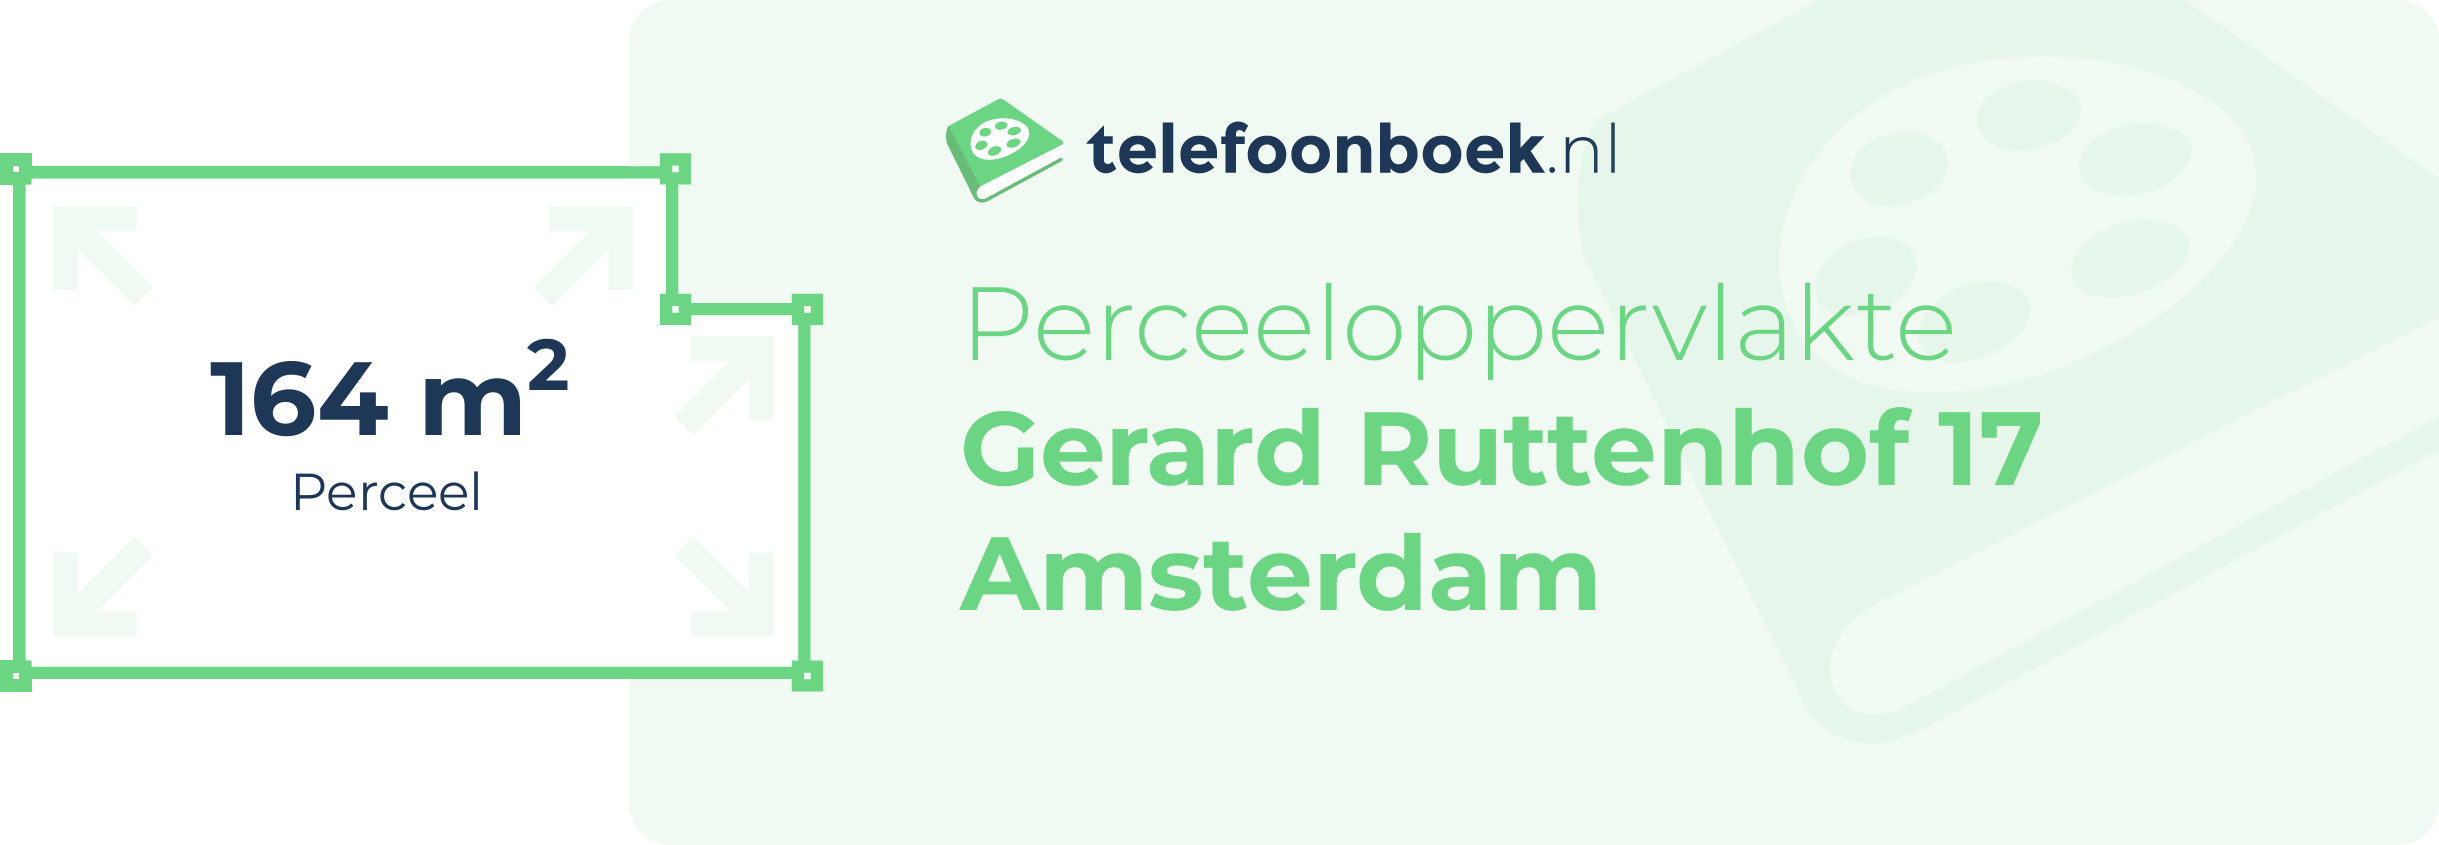 Perceeloppervlakte Gerard Ruttenhof 17 Amsterdam